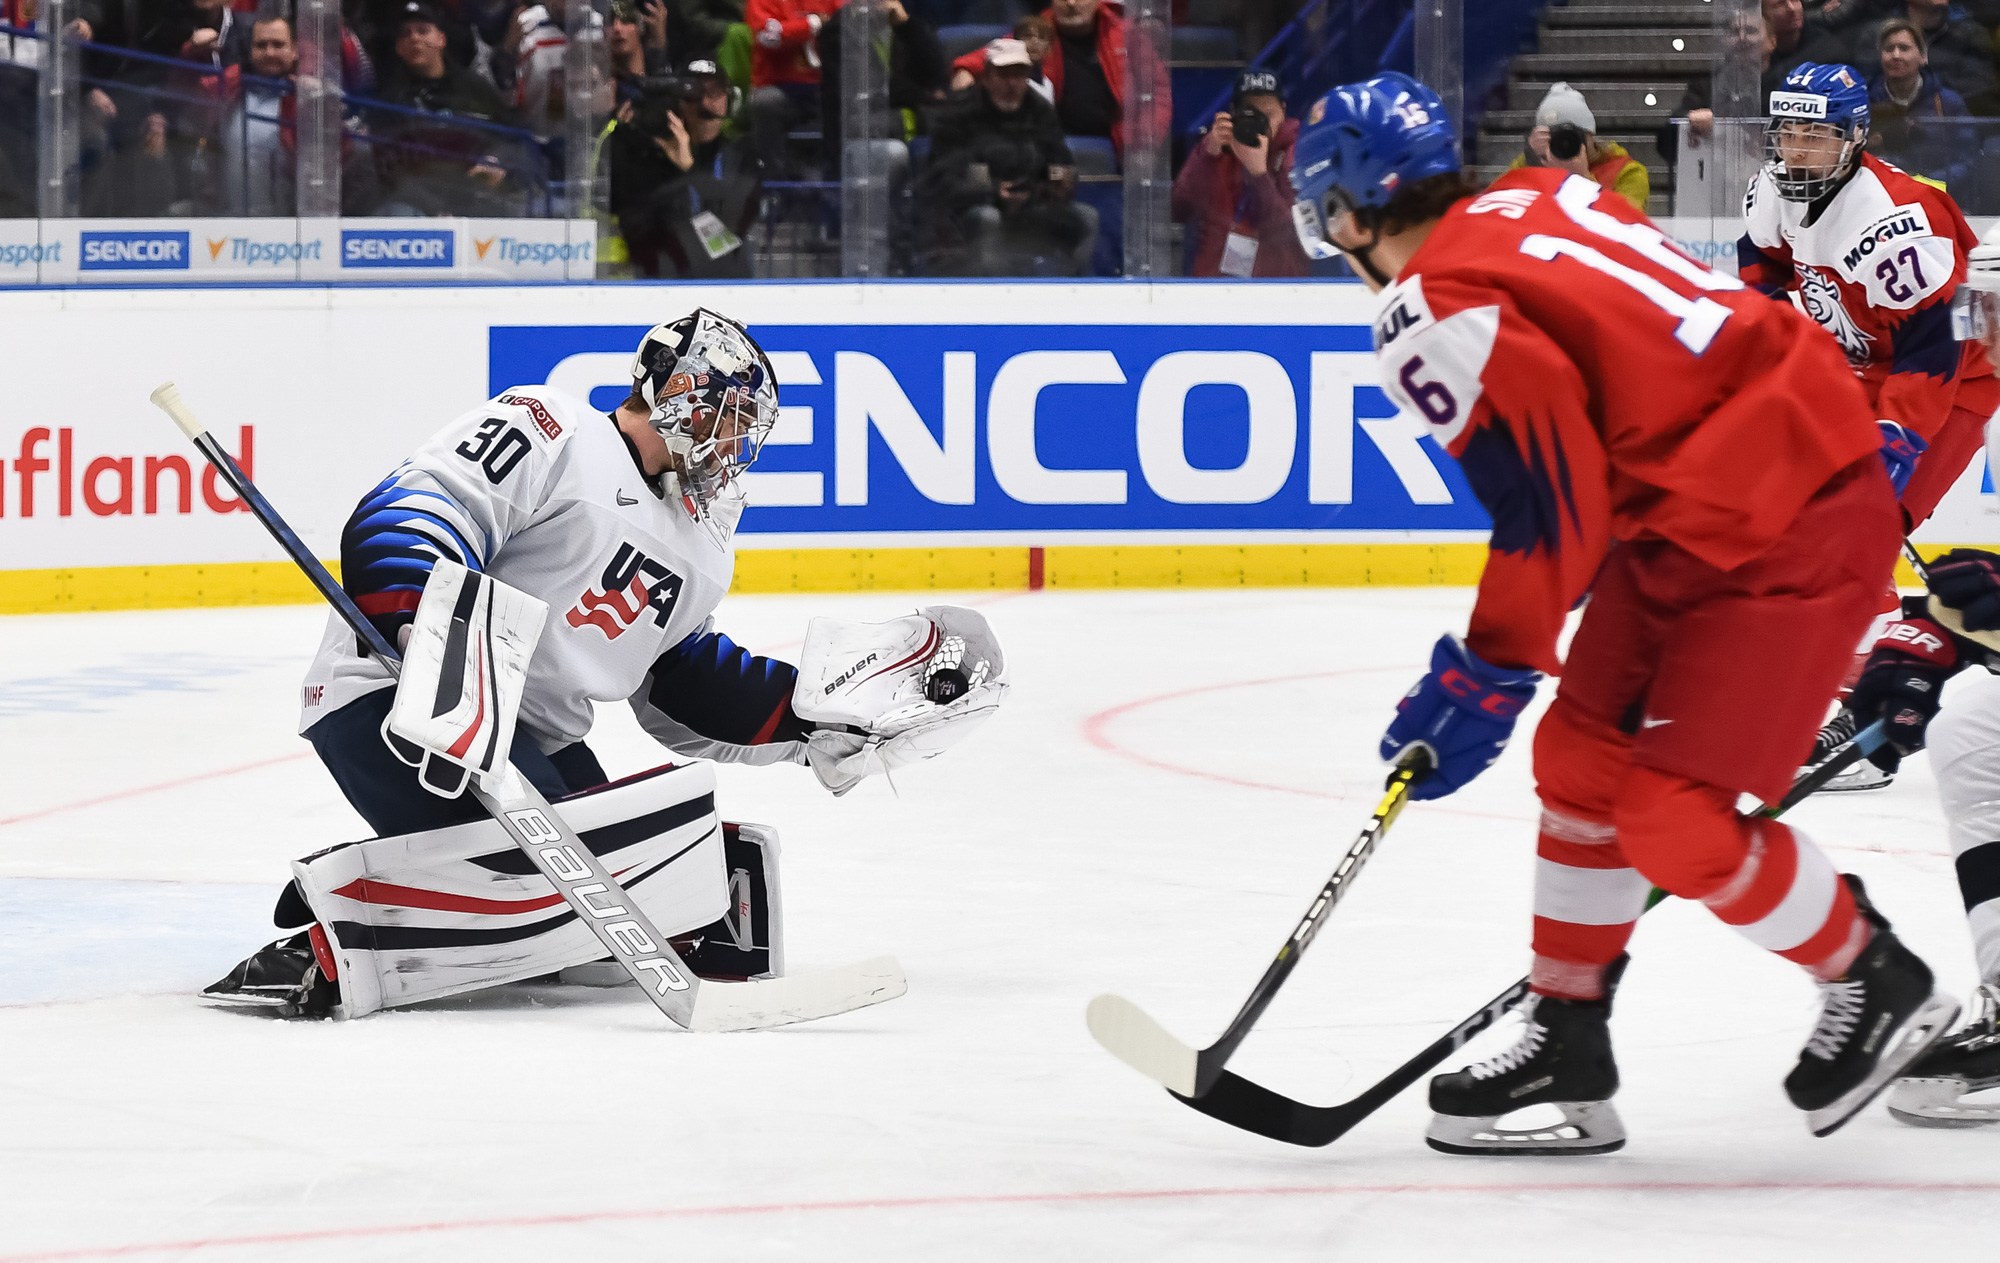 IIHF - USA wins OT thriller